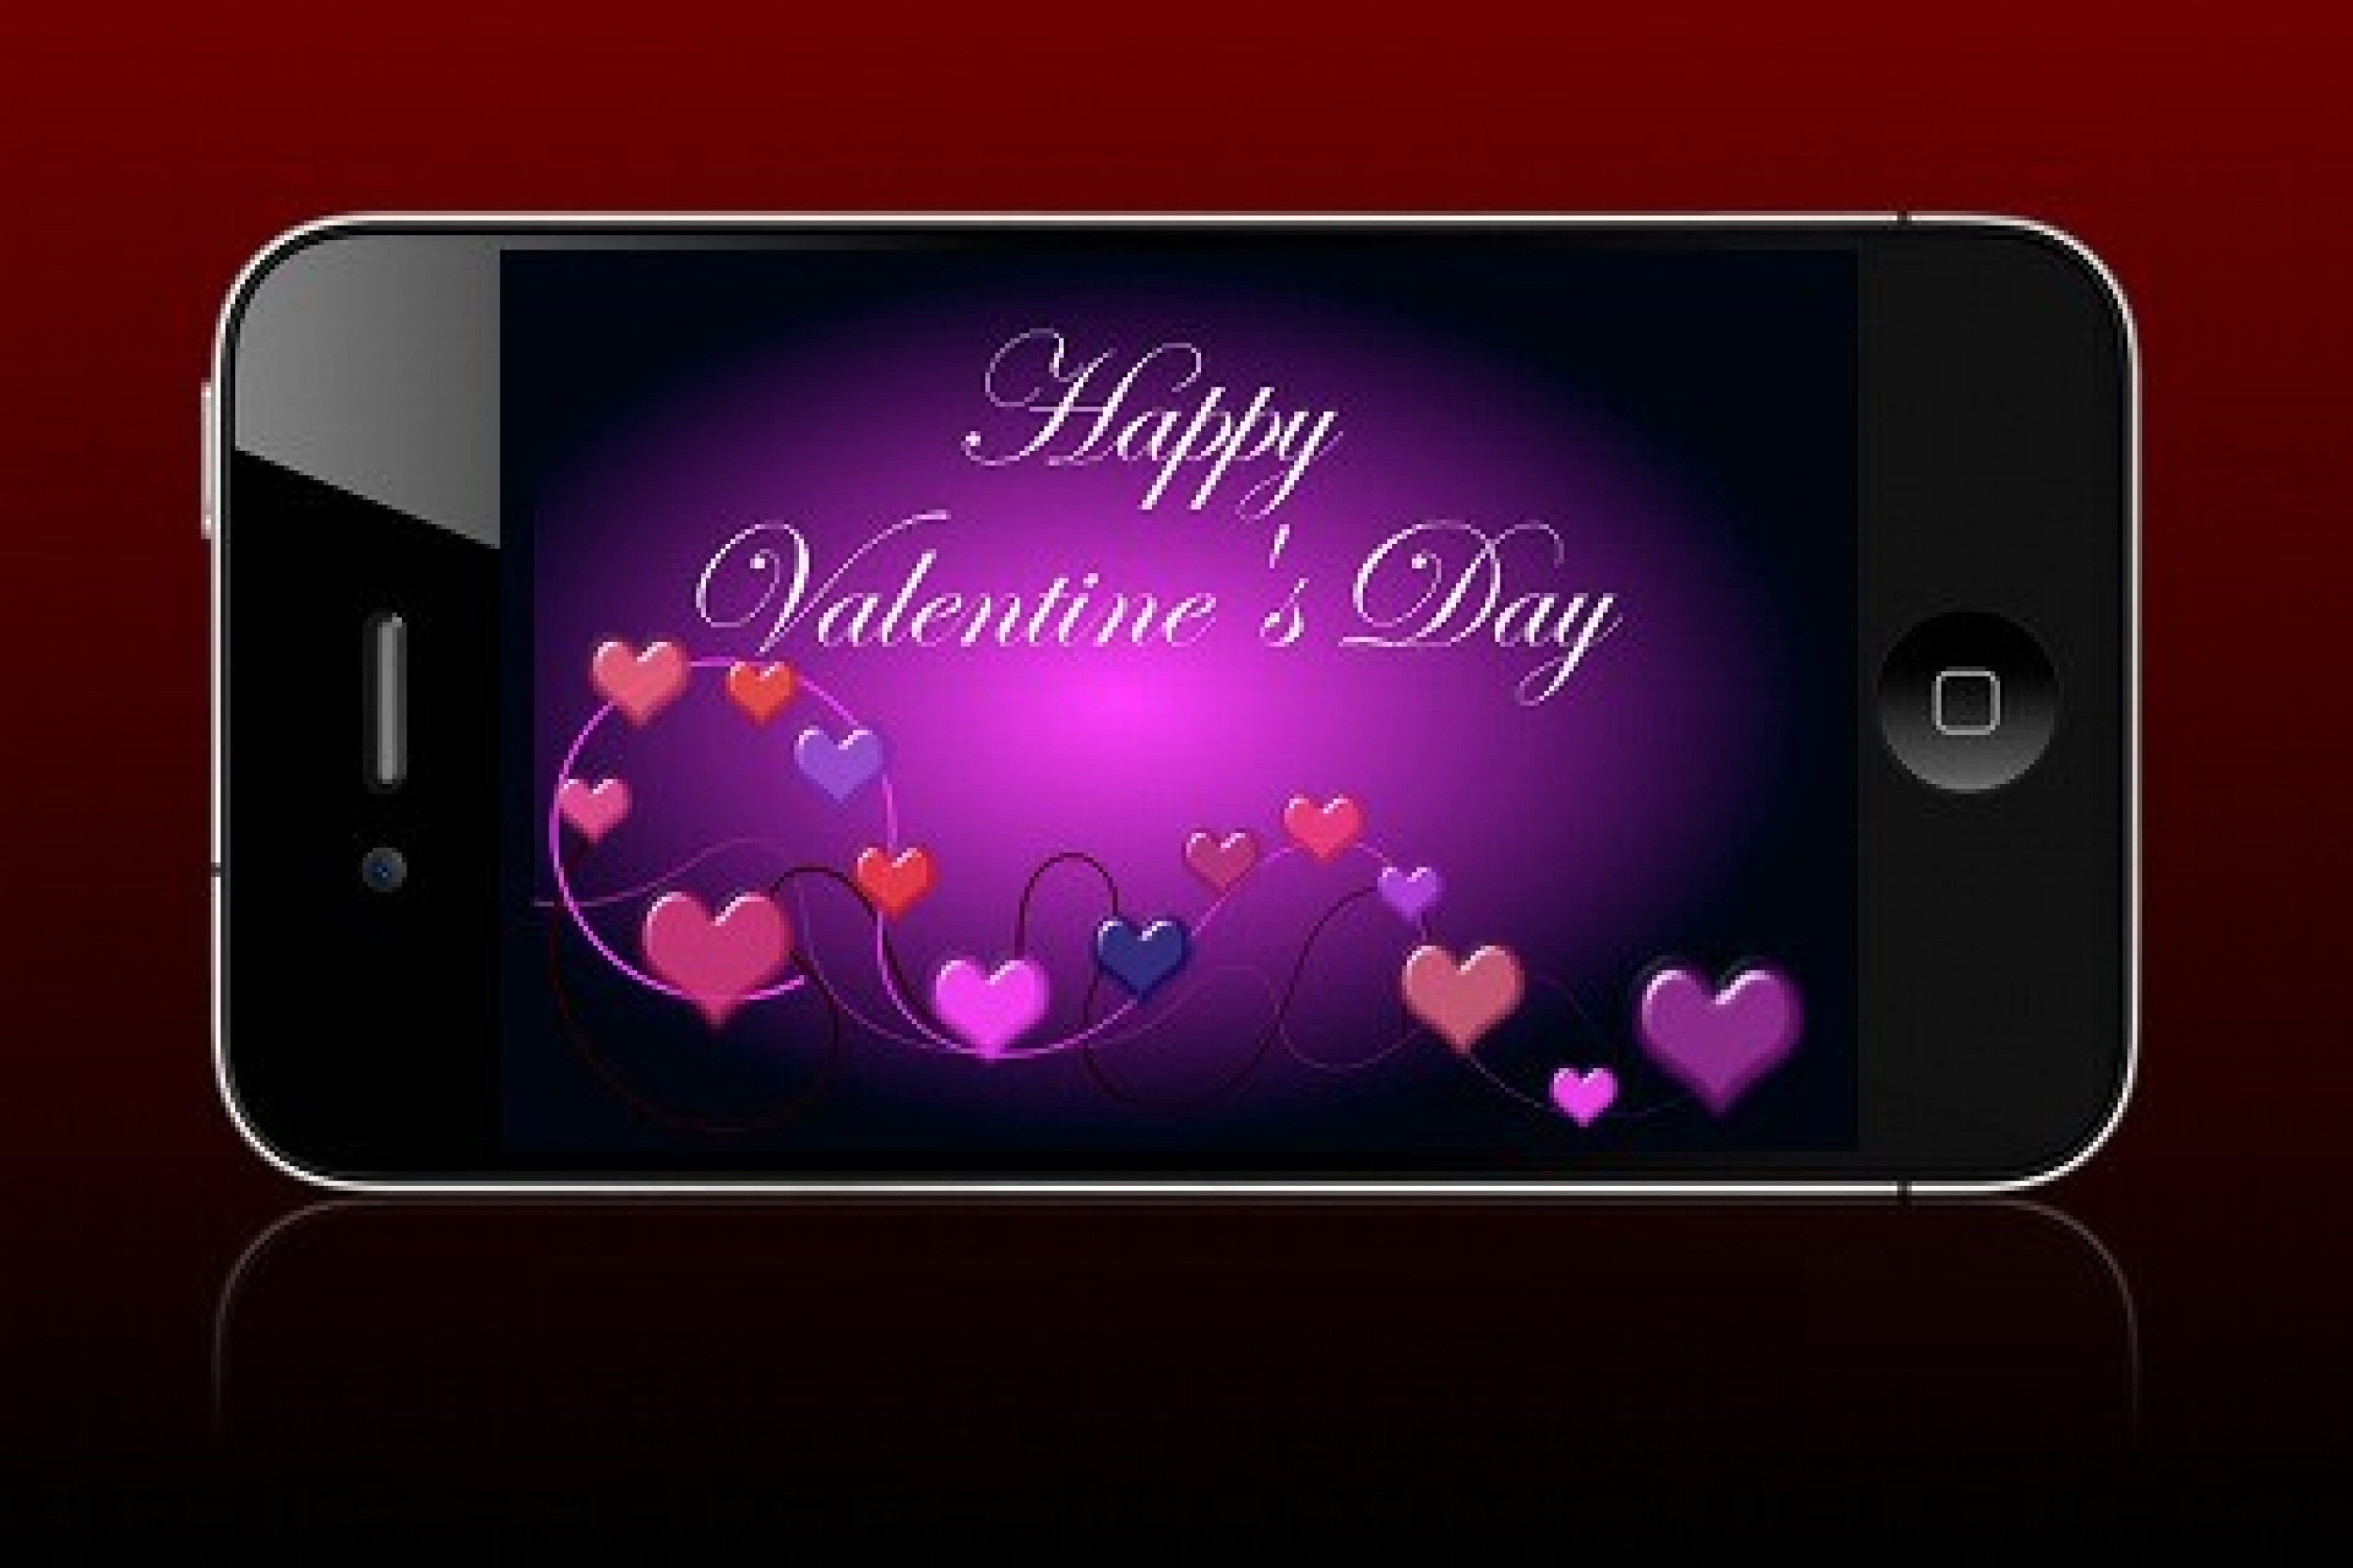 Be Mine Lite - Valentines Day Card Creator